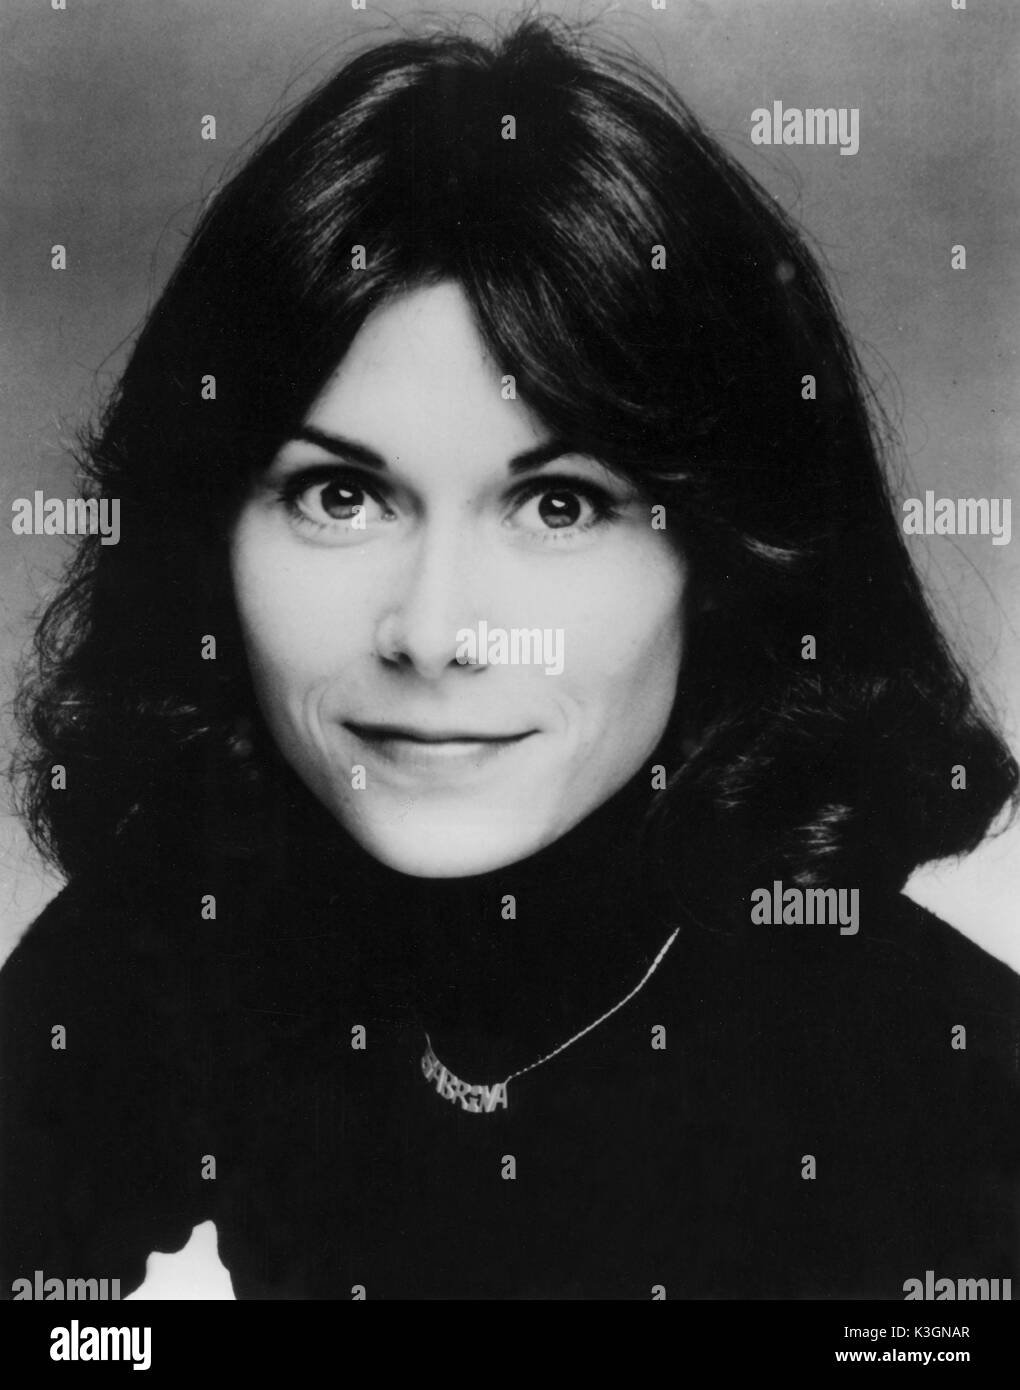 CHARLIE'S ANGELS   [US TV SERIES 1976 - 1981]  KATE JACKSON as Sabrina Duncan Stock Photo